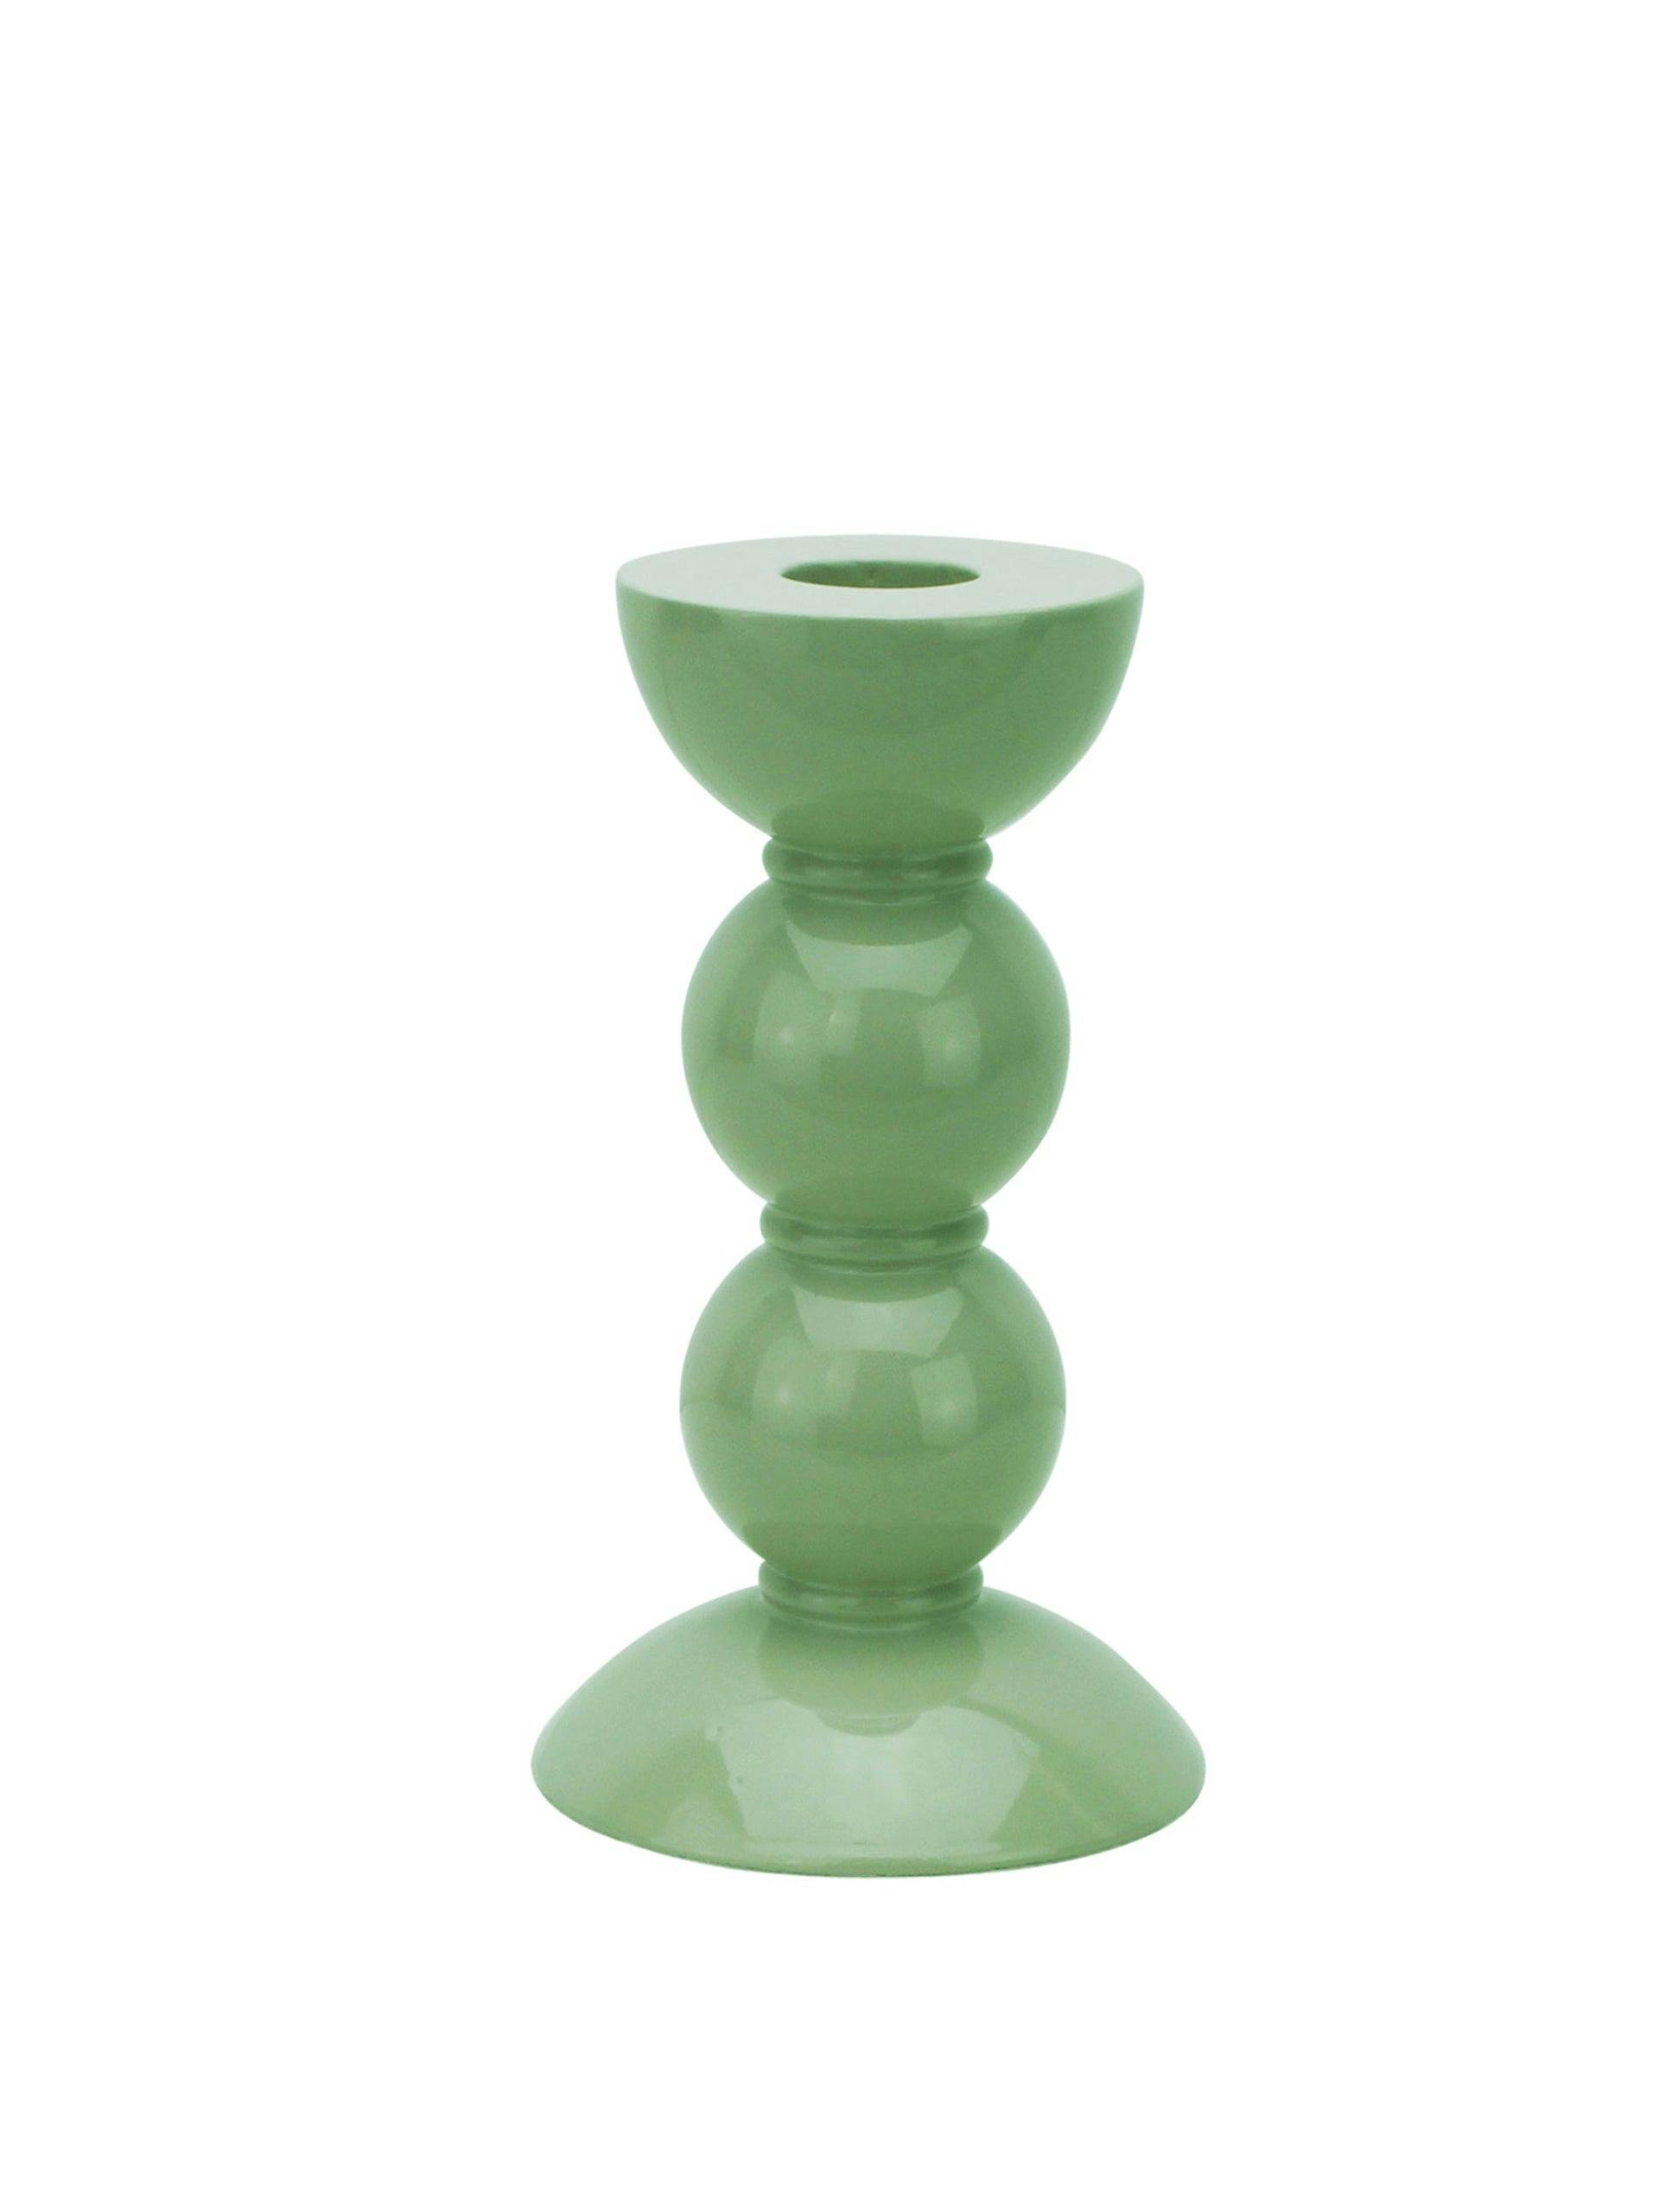 Short bobbin candlestick in sage green